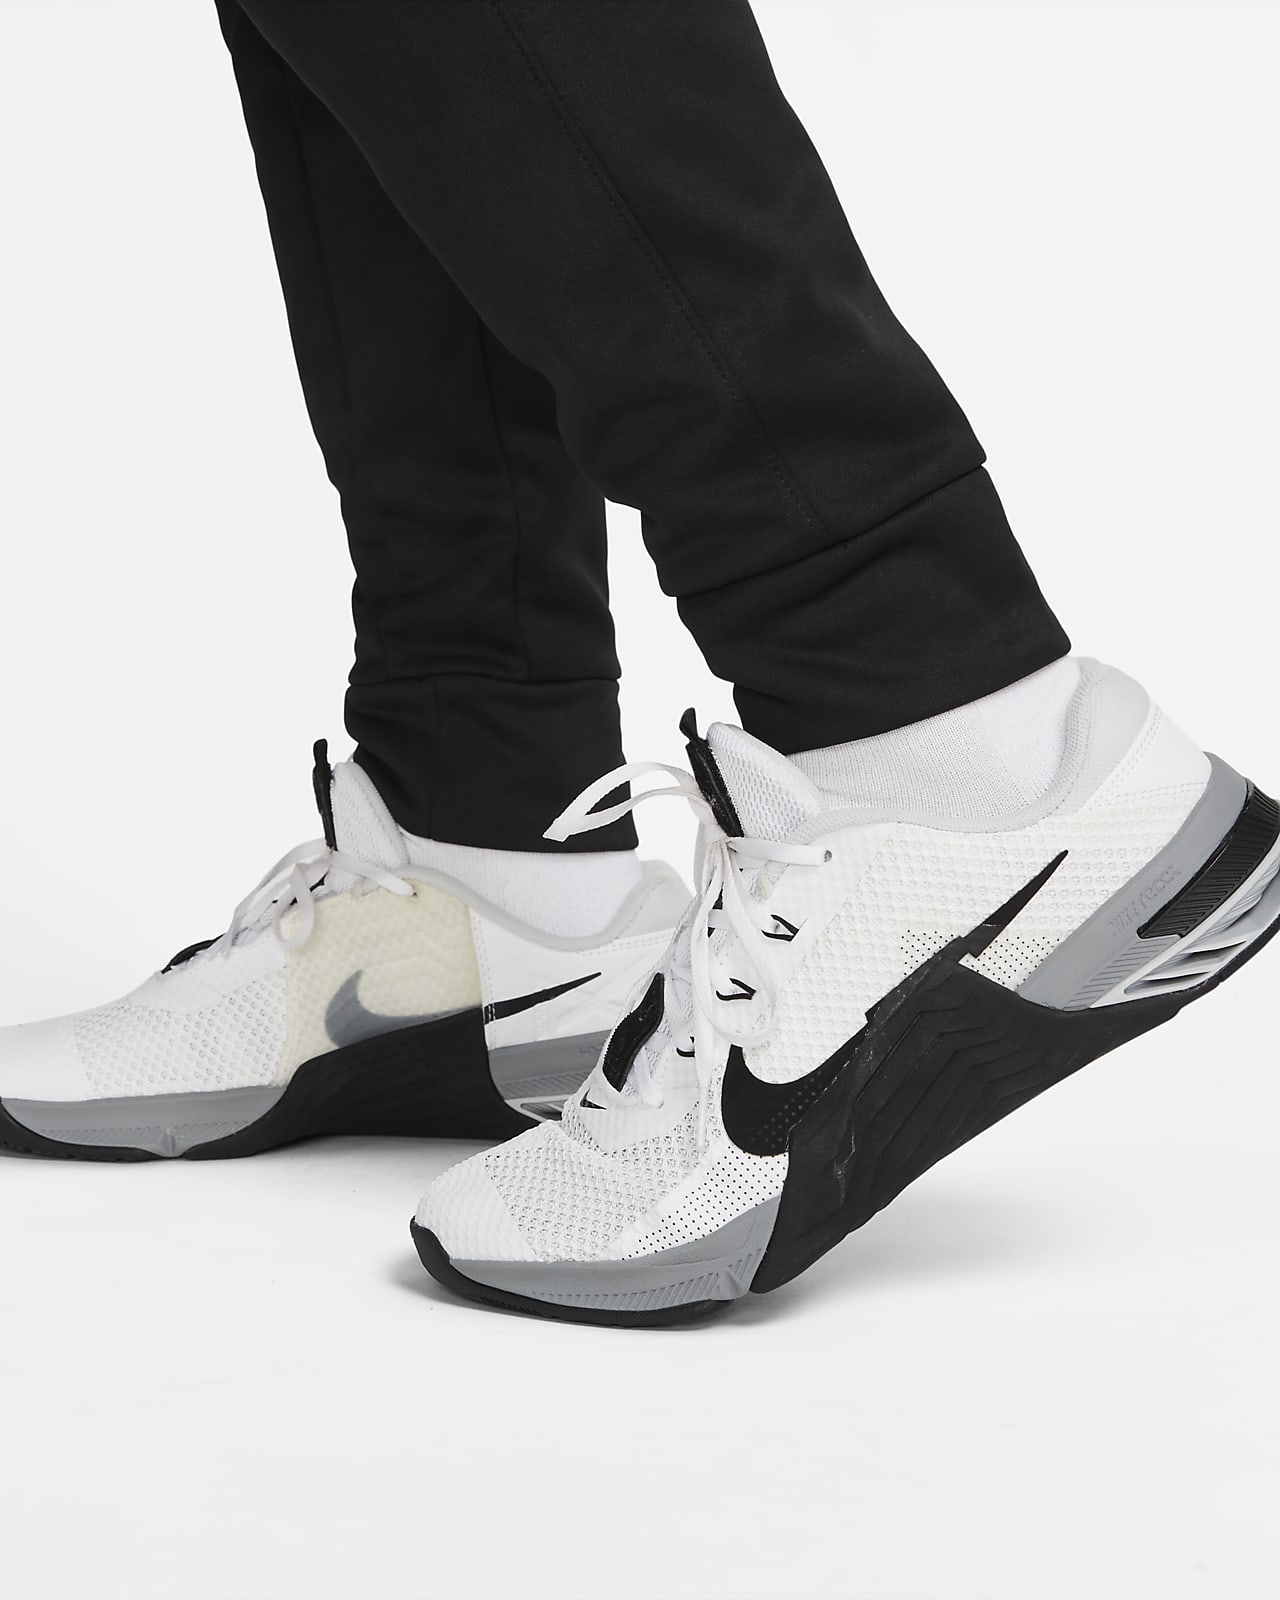 Nike Black Dri-FIT Tapered Lounge Pants Nike